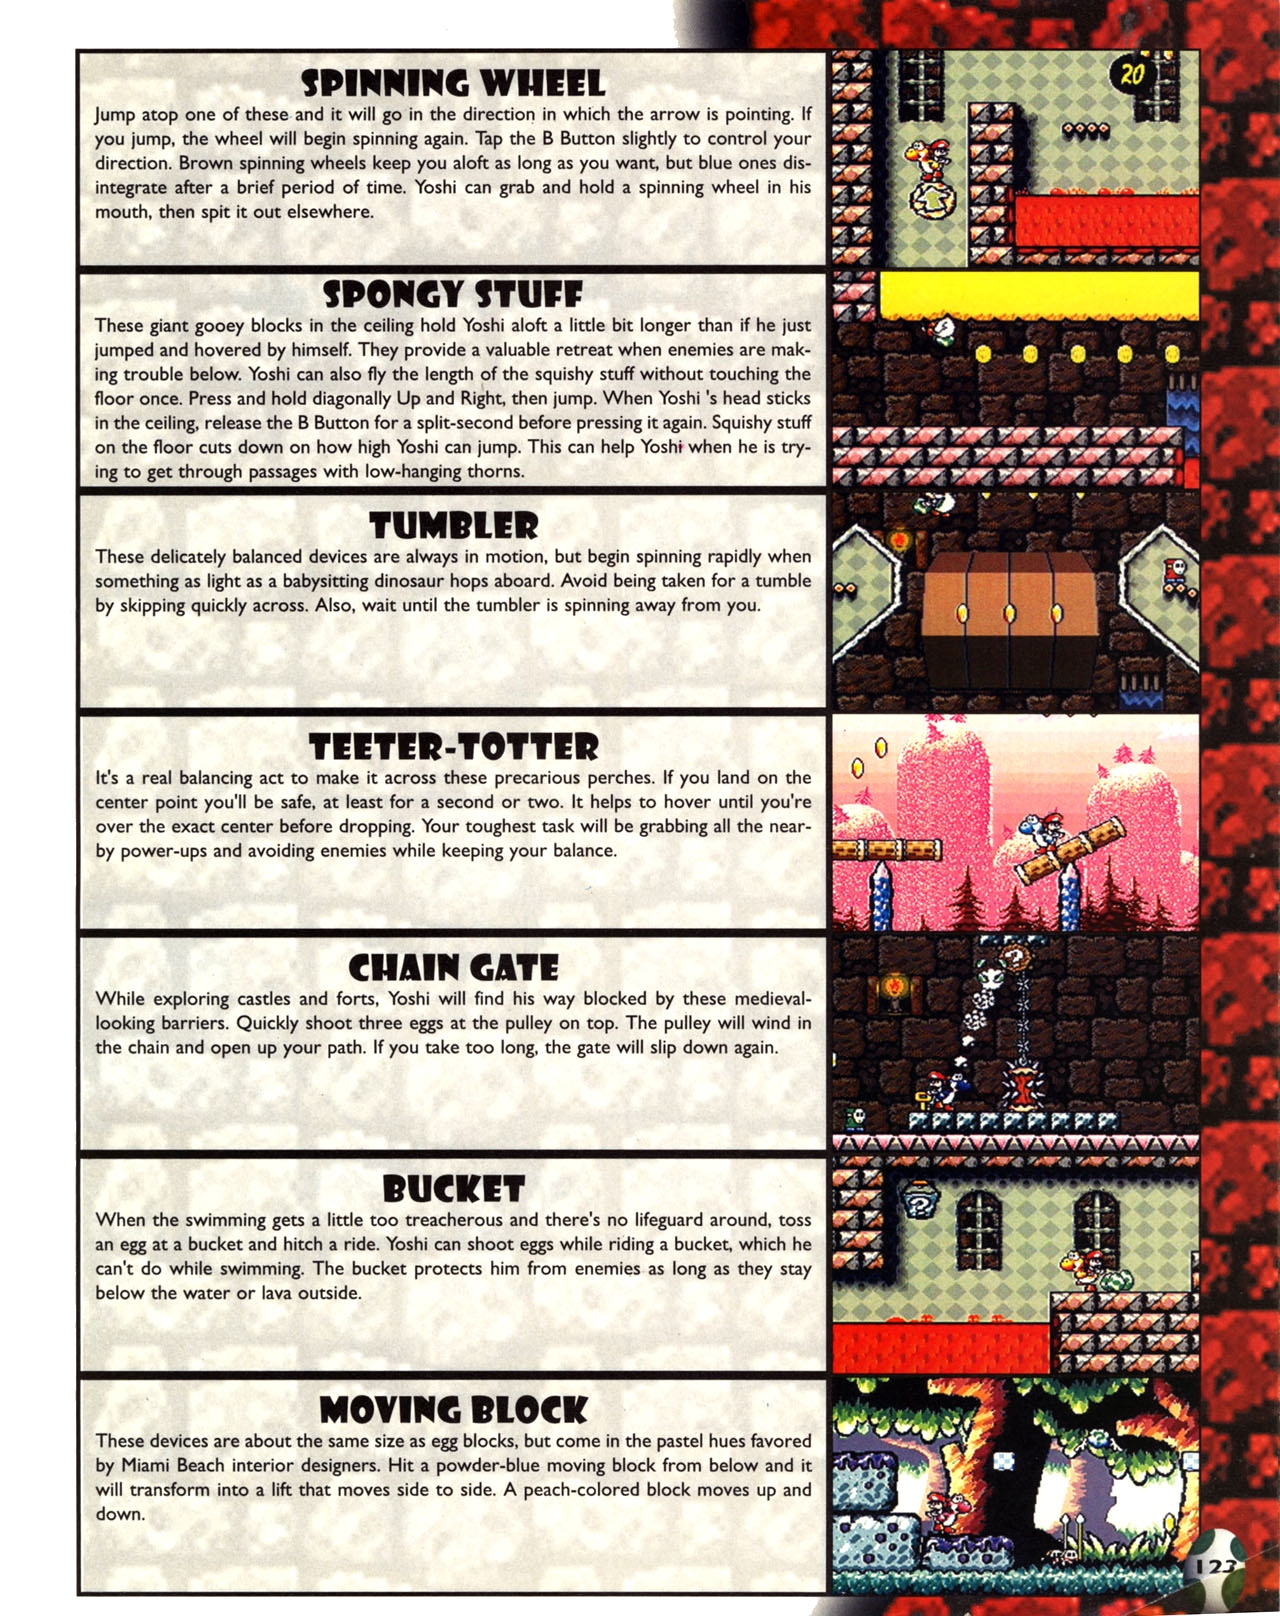 Nintendo Players Guide (SNES) - Super Mario World 2 - Yoshis Island (1995) 66